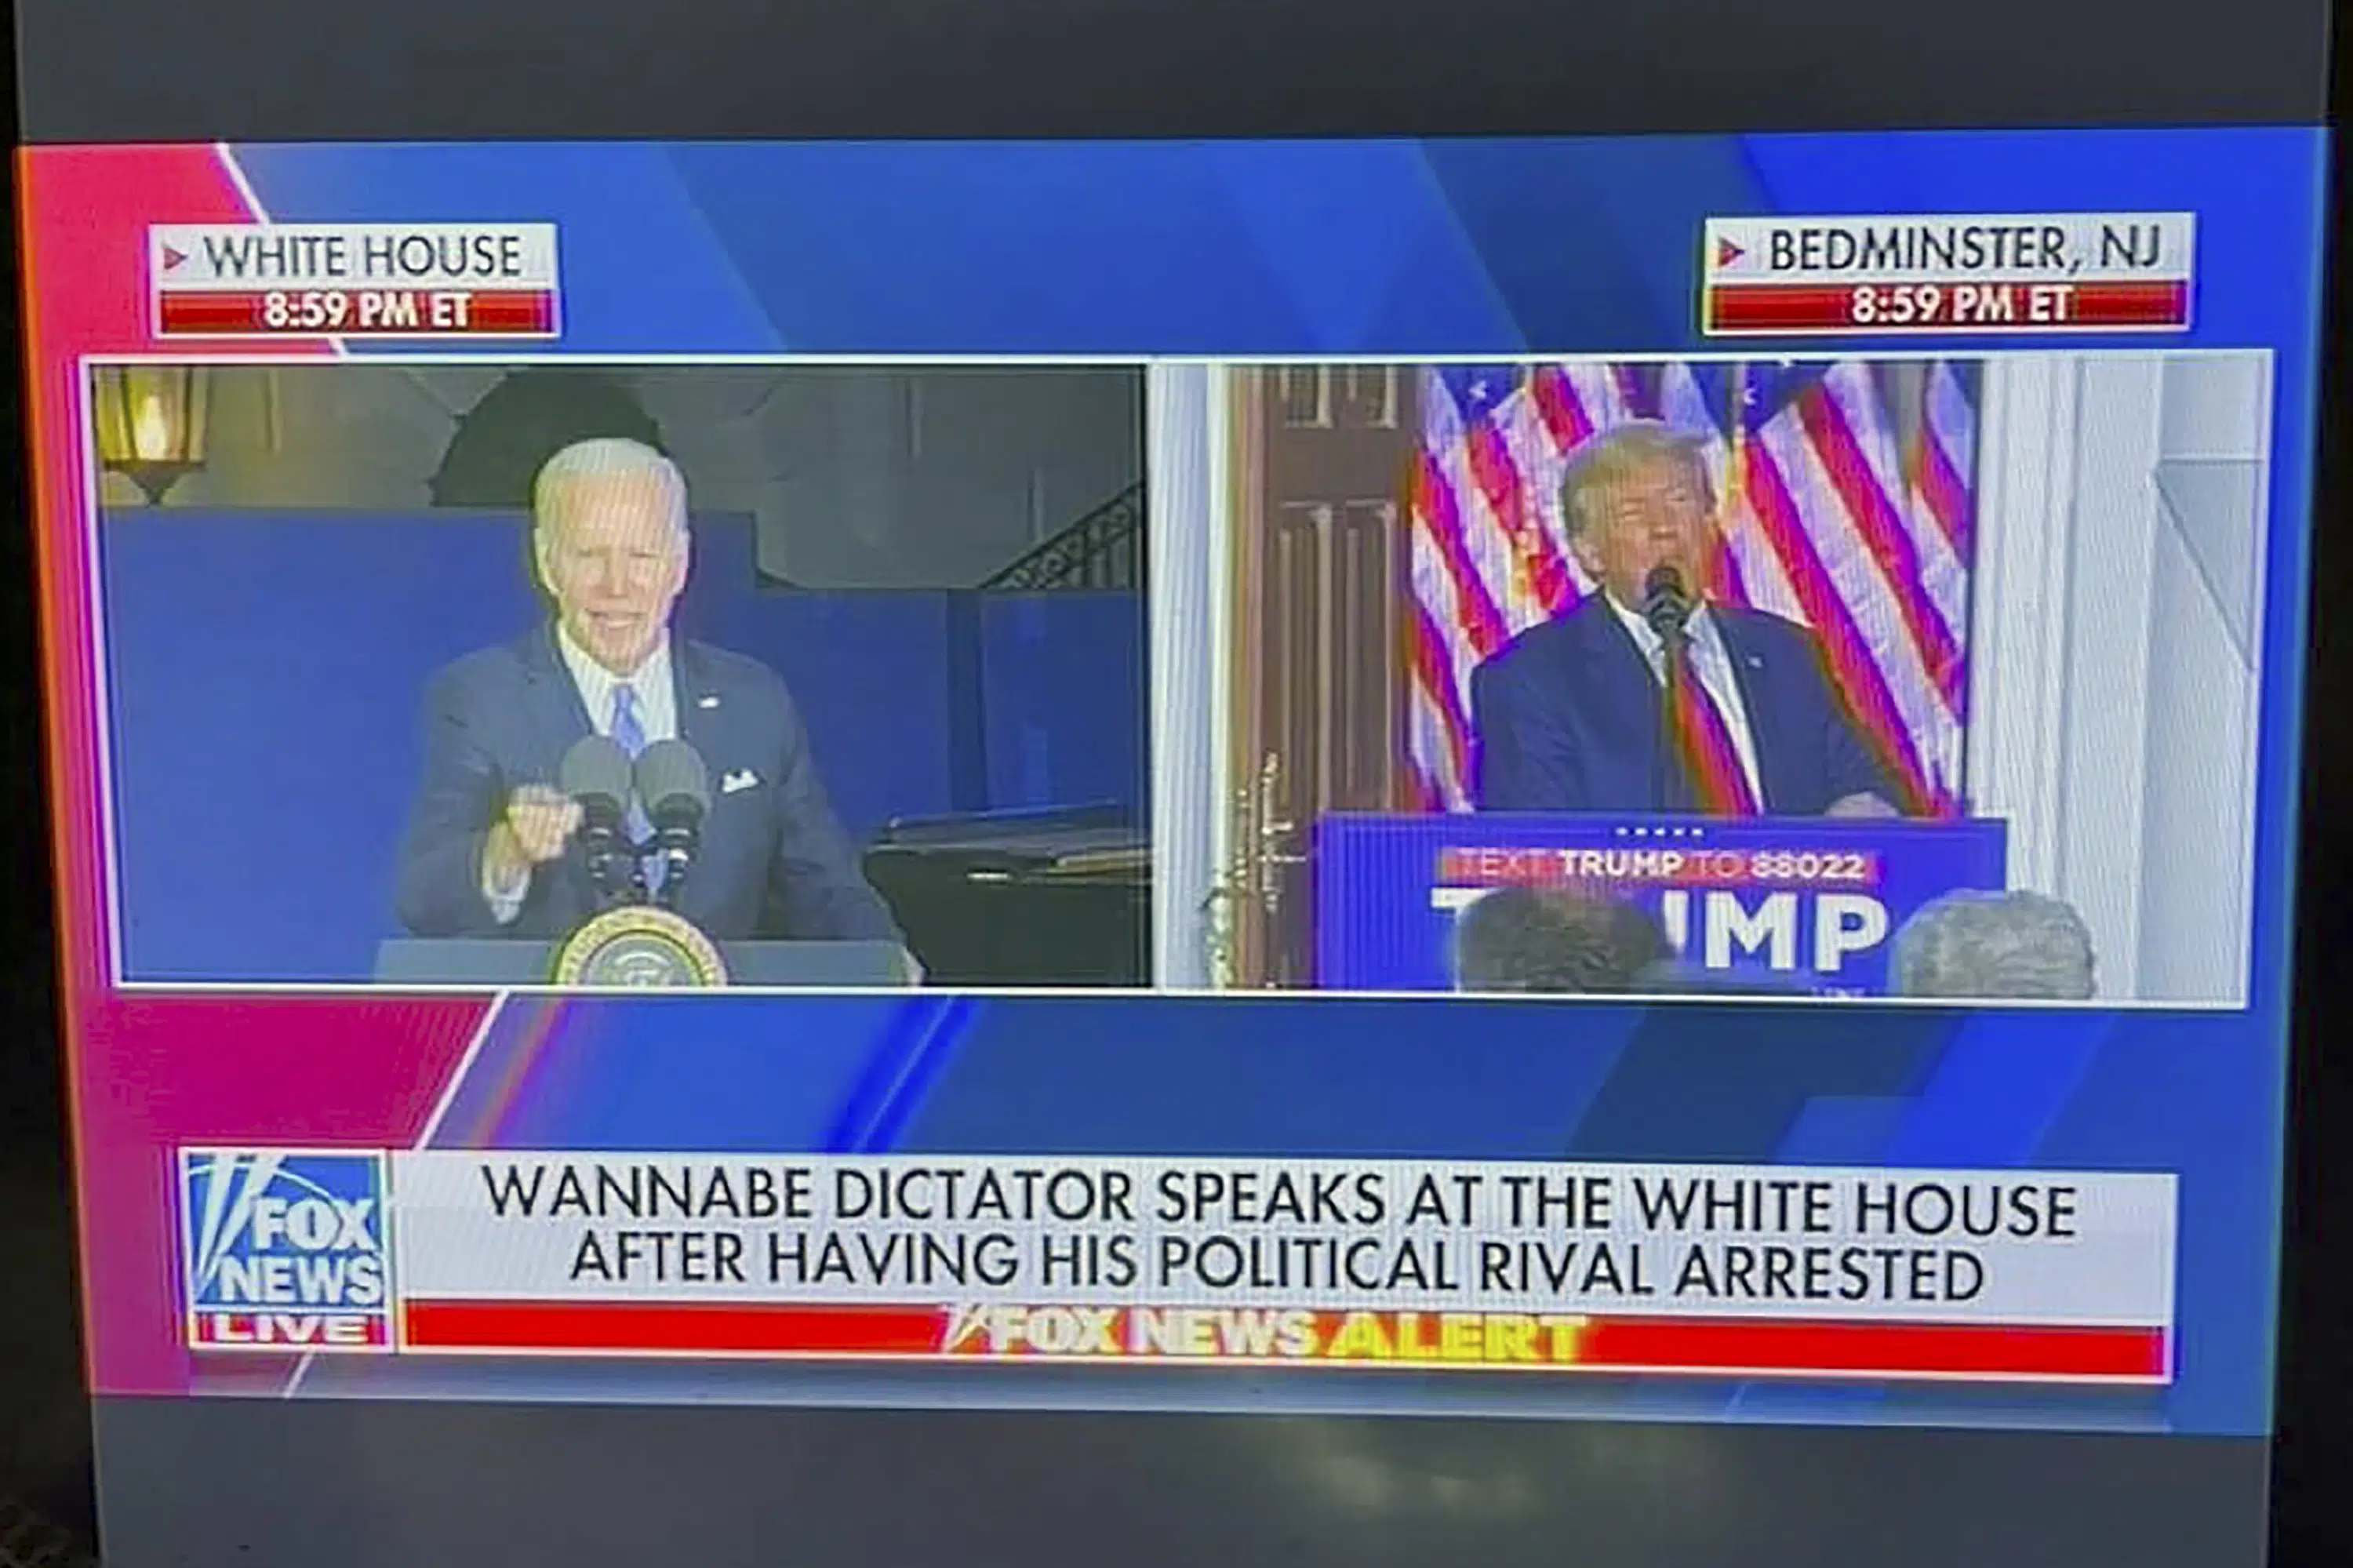 Fox News producer out after onscreen message calling President Biden a ‘wannabe dictator’